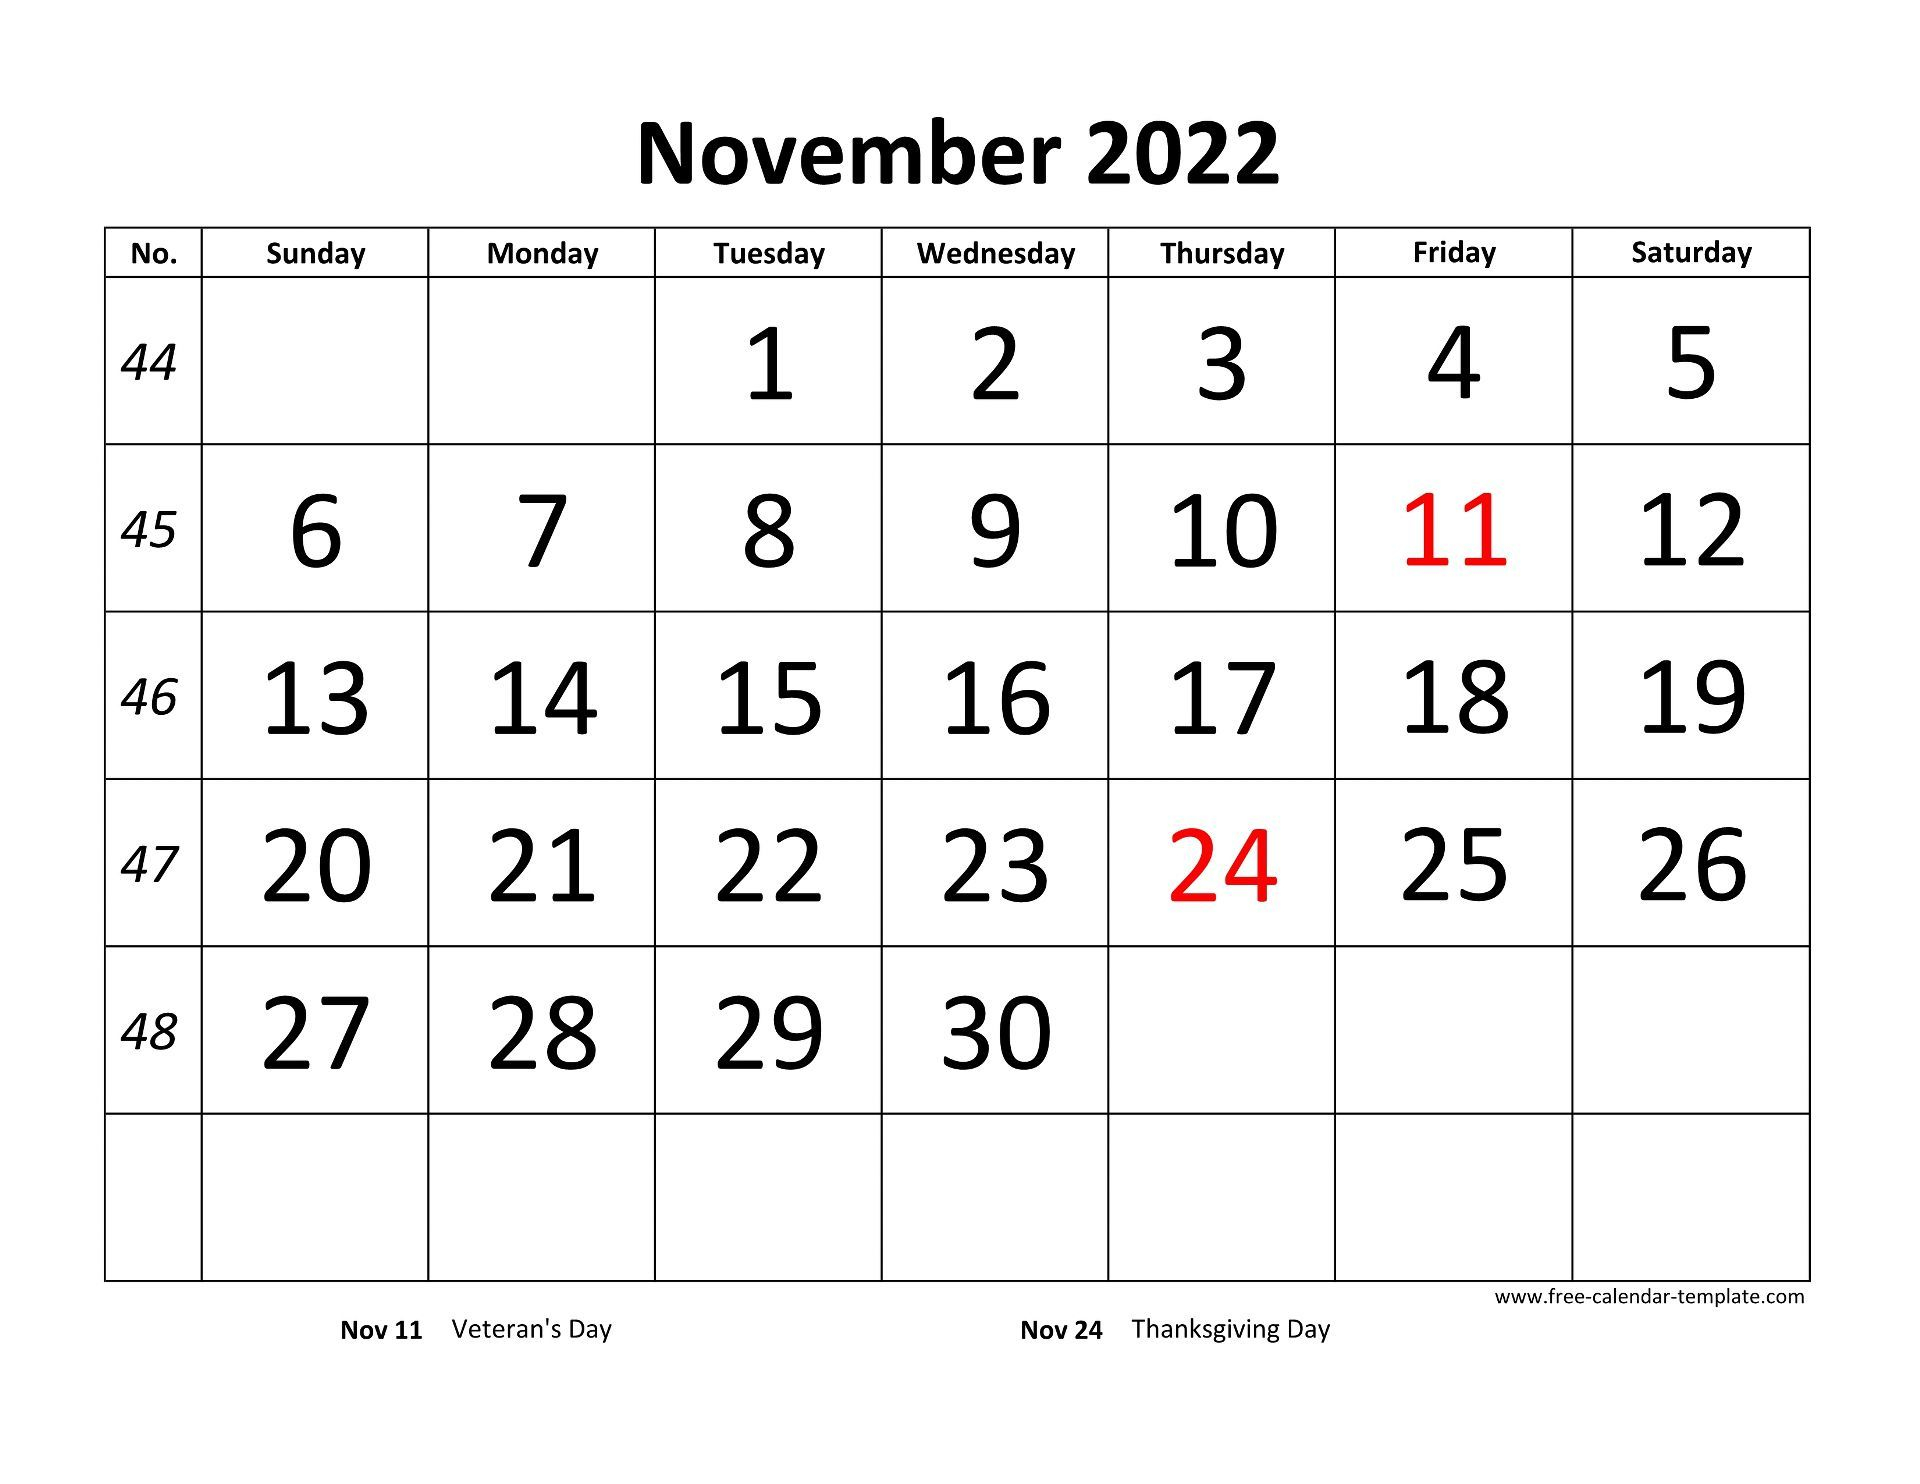 November 2022 Free Calendar Tempplate | Free-Calendar